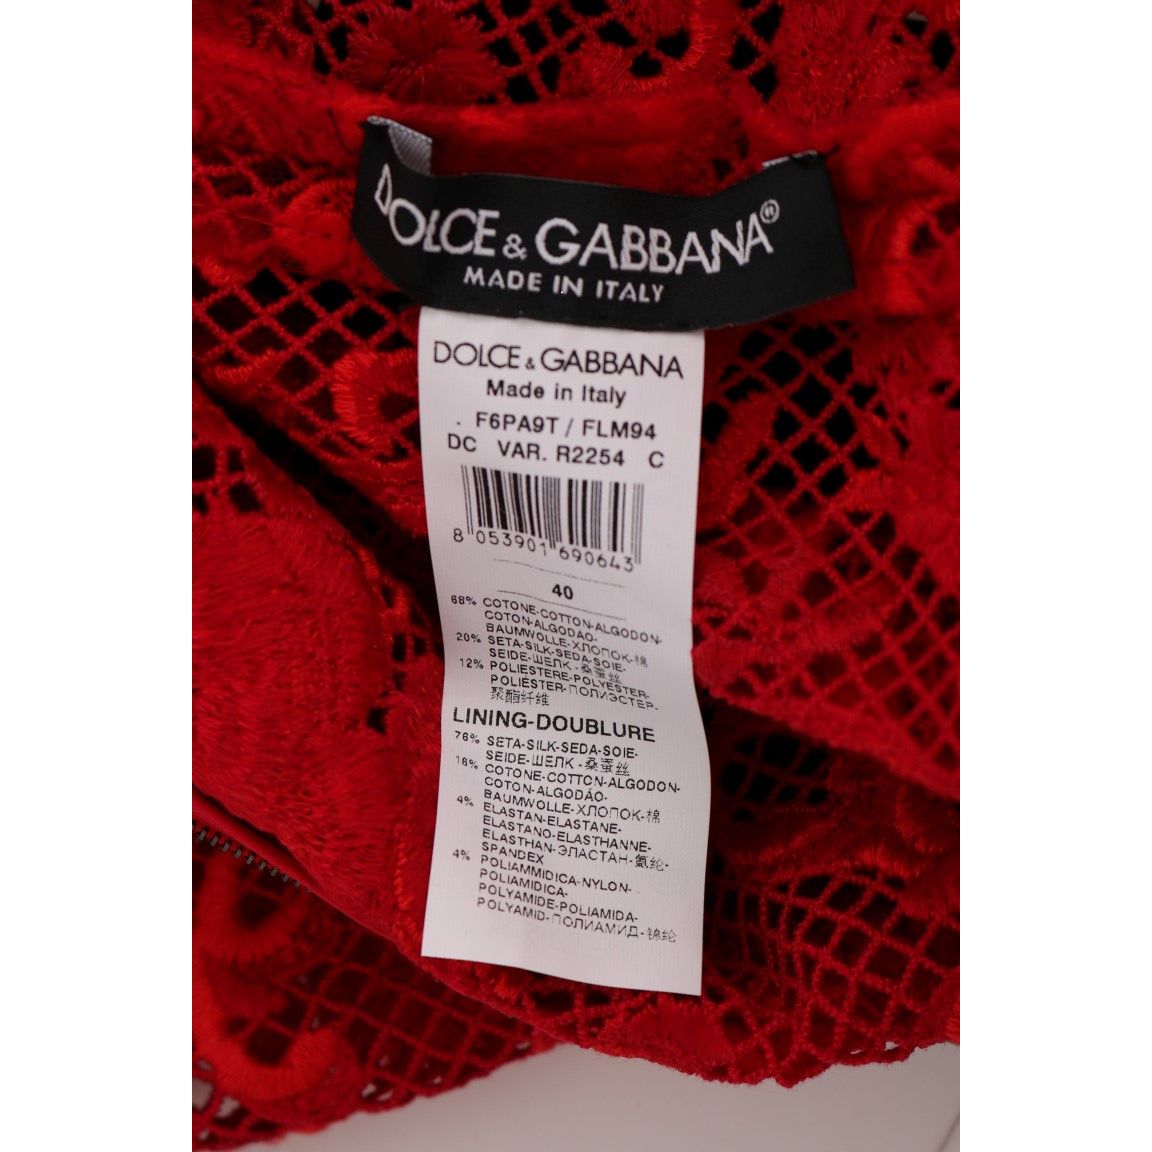 Dolce & Gabbana Elegant Red Sheath Dress with Silk Bow Belt WOMAN DRESSES red-floral-ricamo-sheath-long-dress